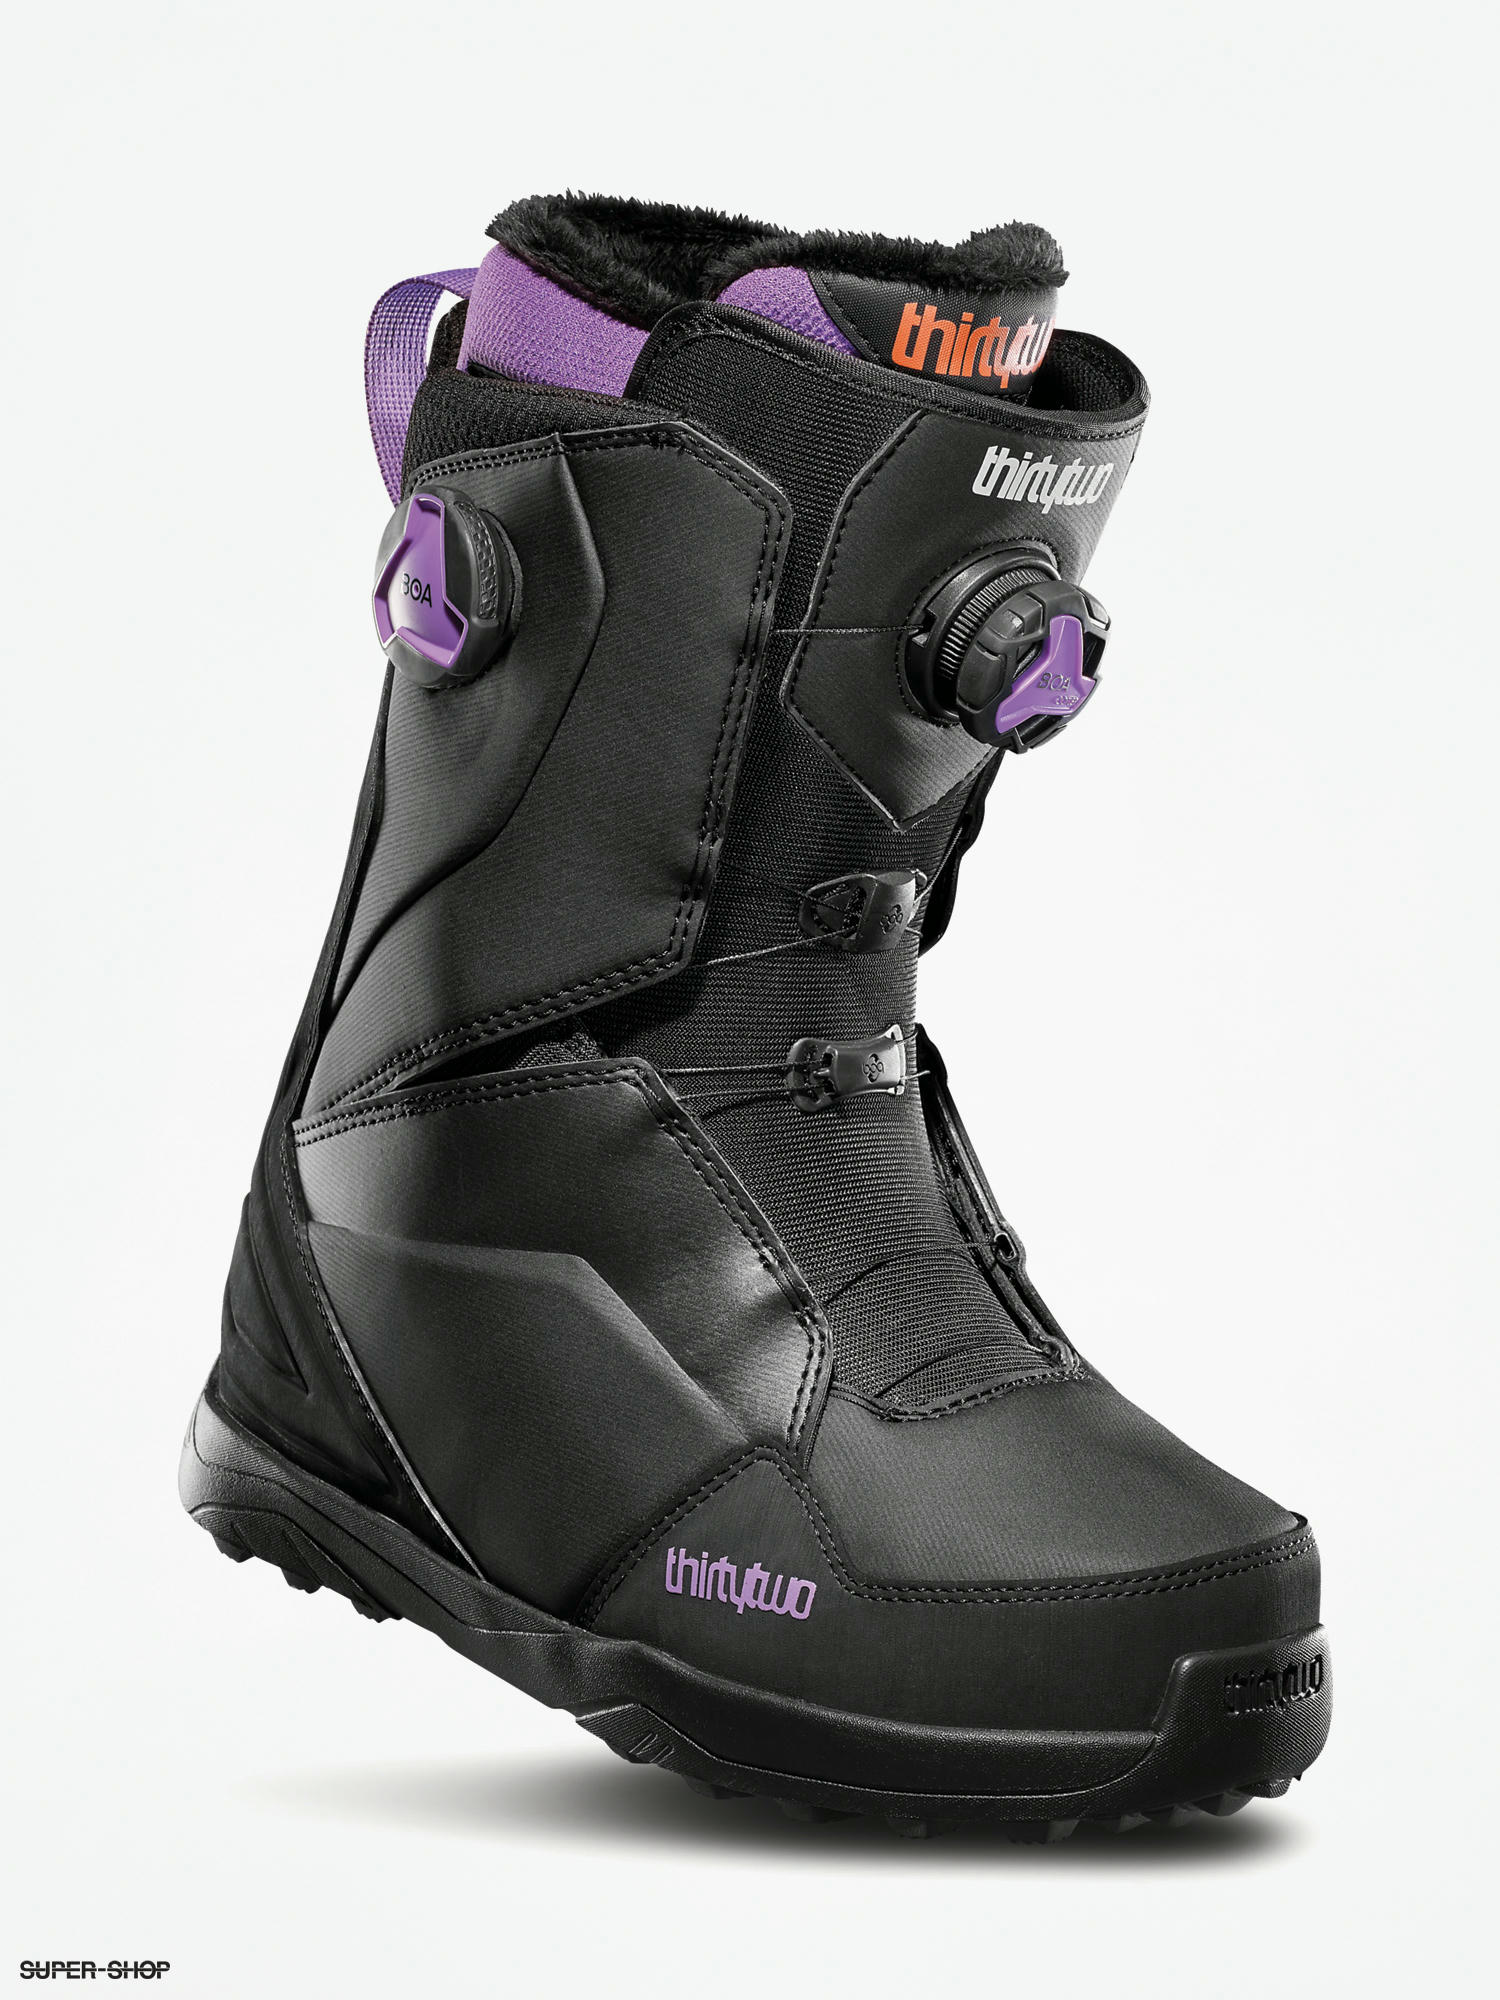 purple snowboard boots